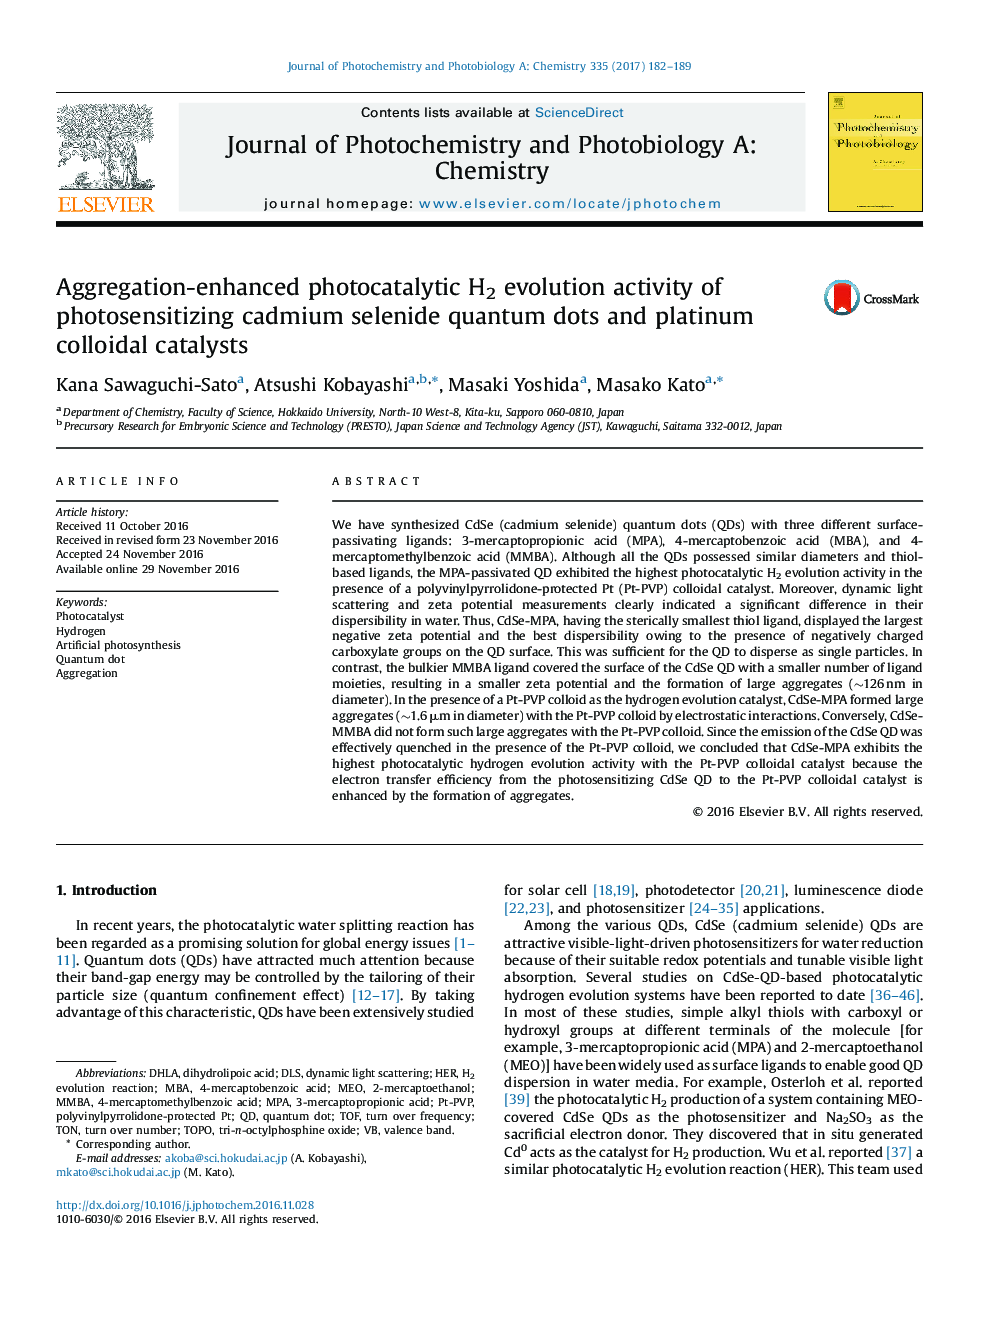 Aggregation-enhanced photocatalytic H2 evolution activity of photosensitizing cadmium selenide quantum dots and platinum colloidal catalysts